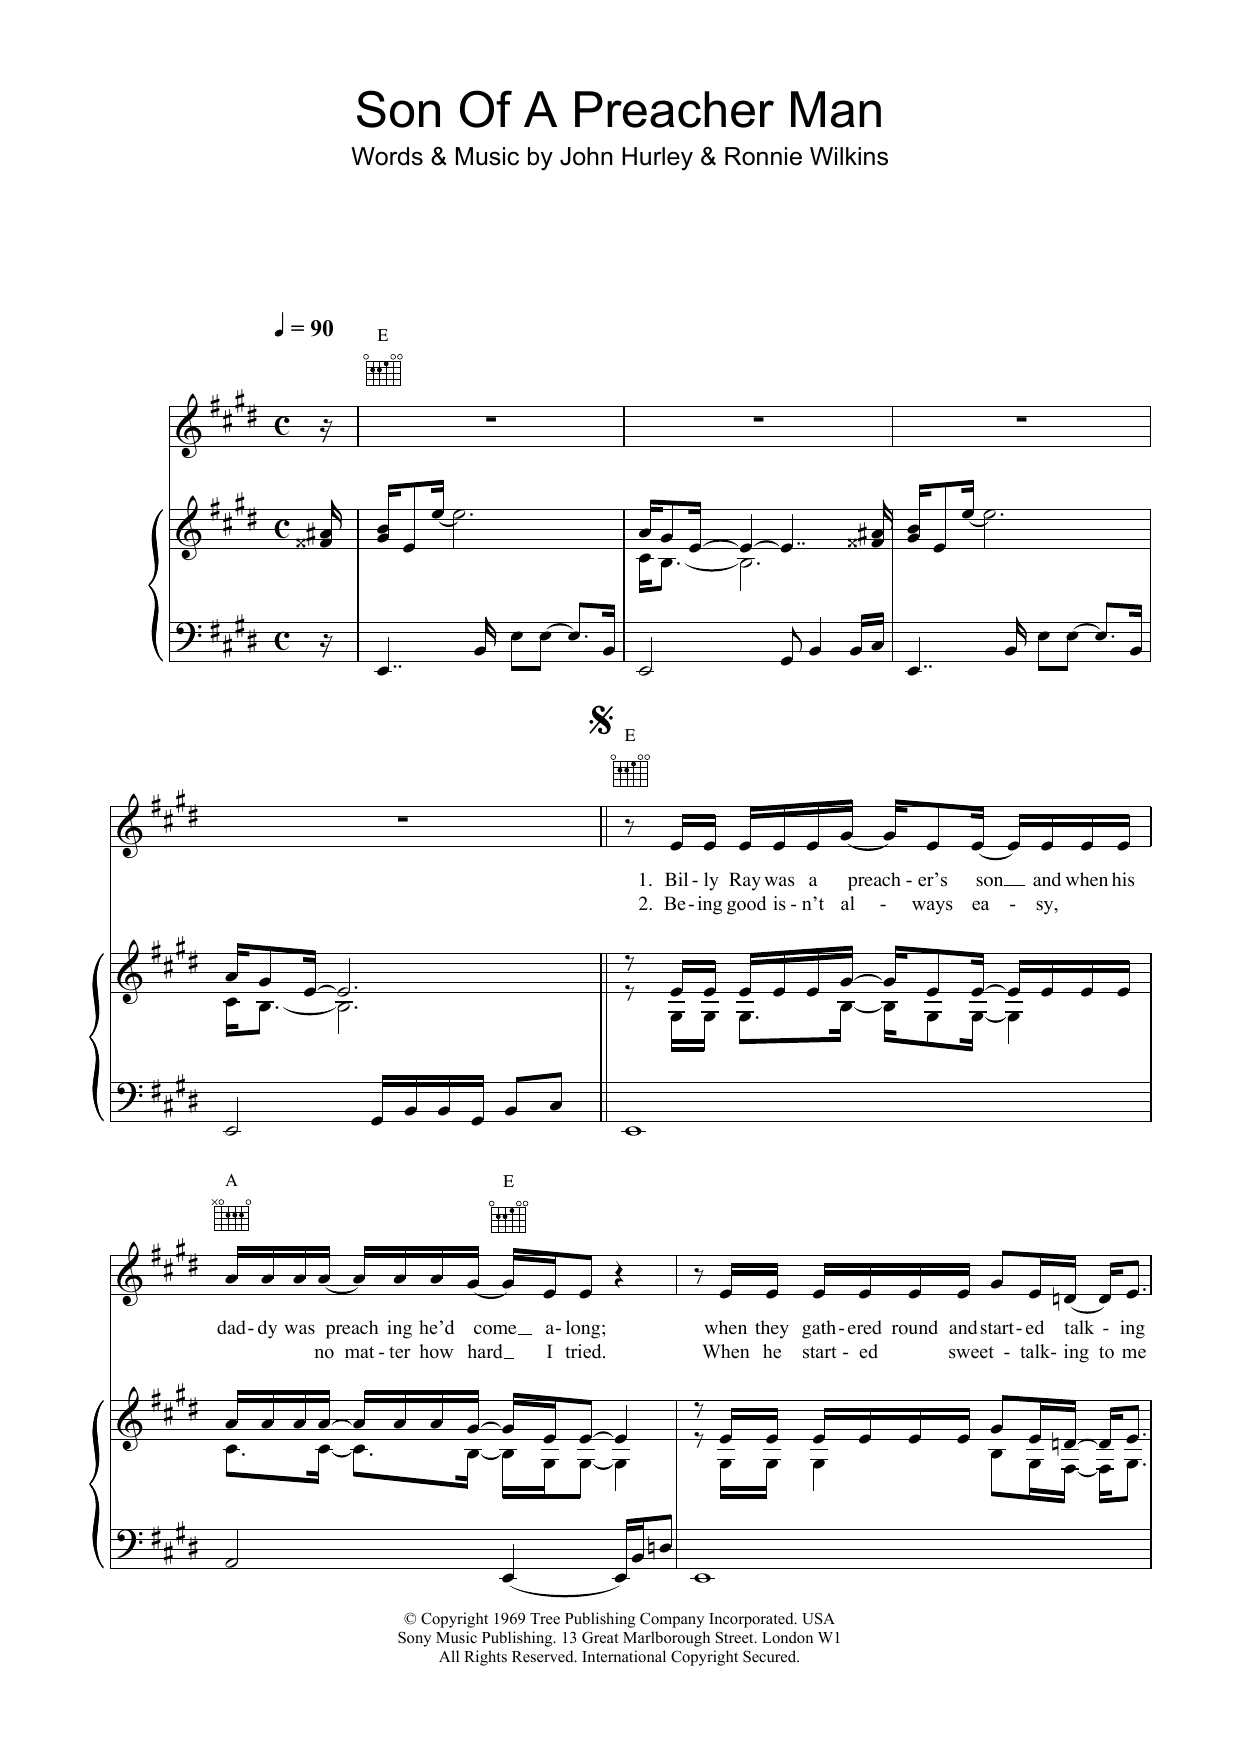 Dusty Springfield Son-Of-A-Preacher Man sheet music notes printable PDF score